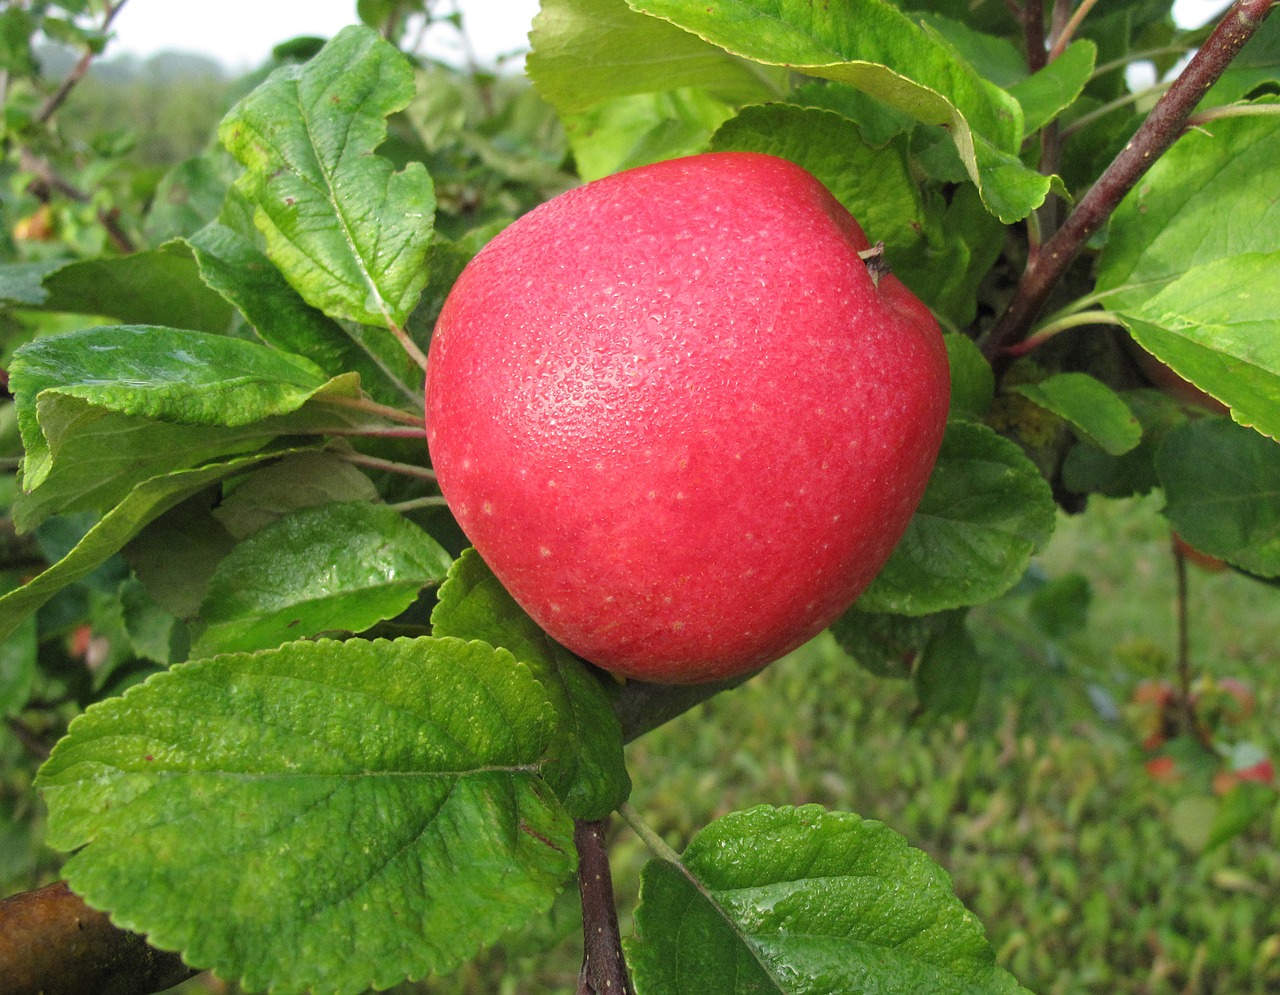 apple fruit red apple free photo